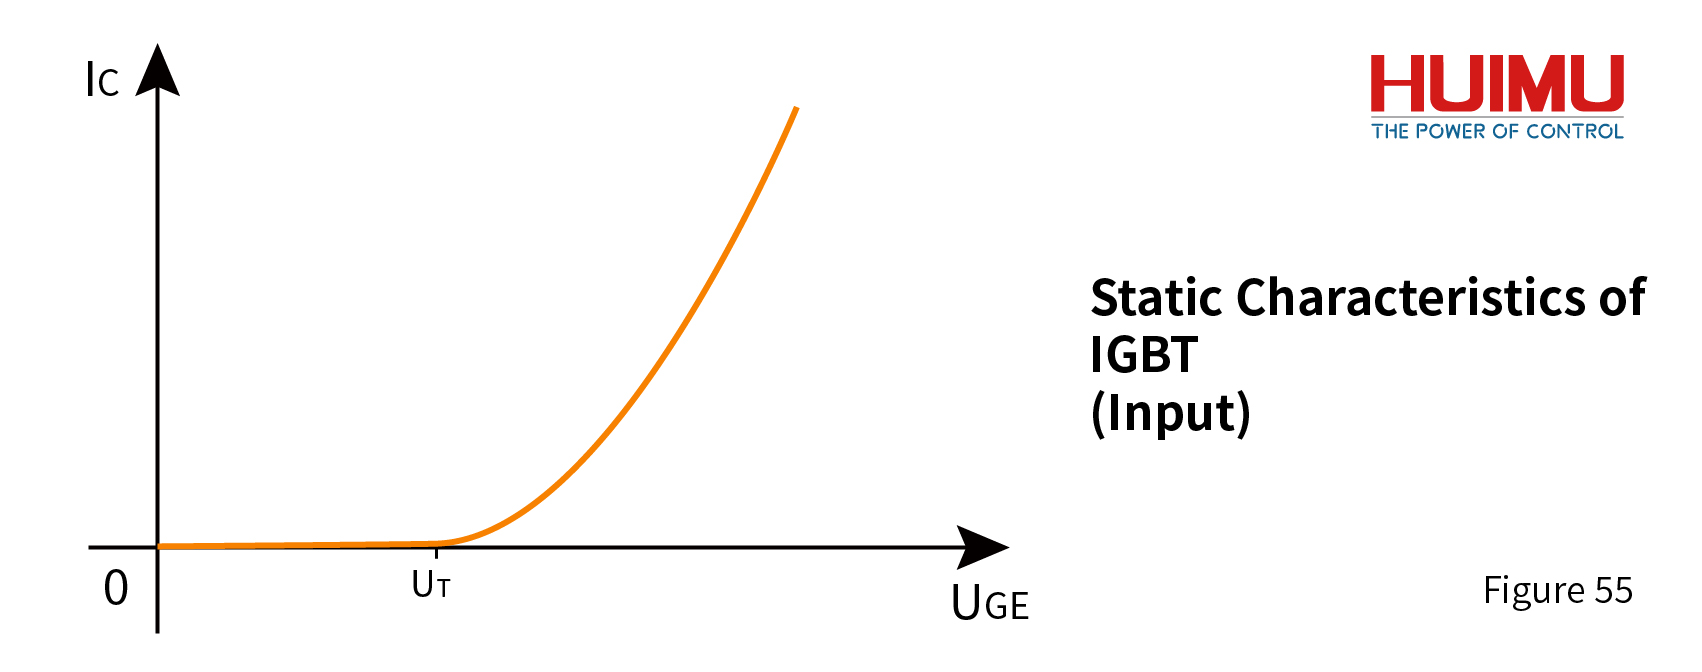 The Input of IGBT